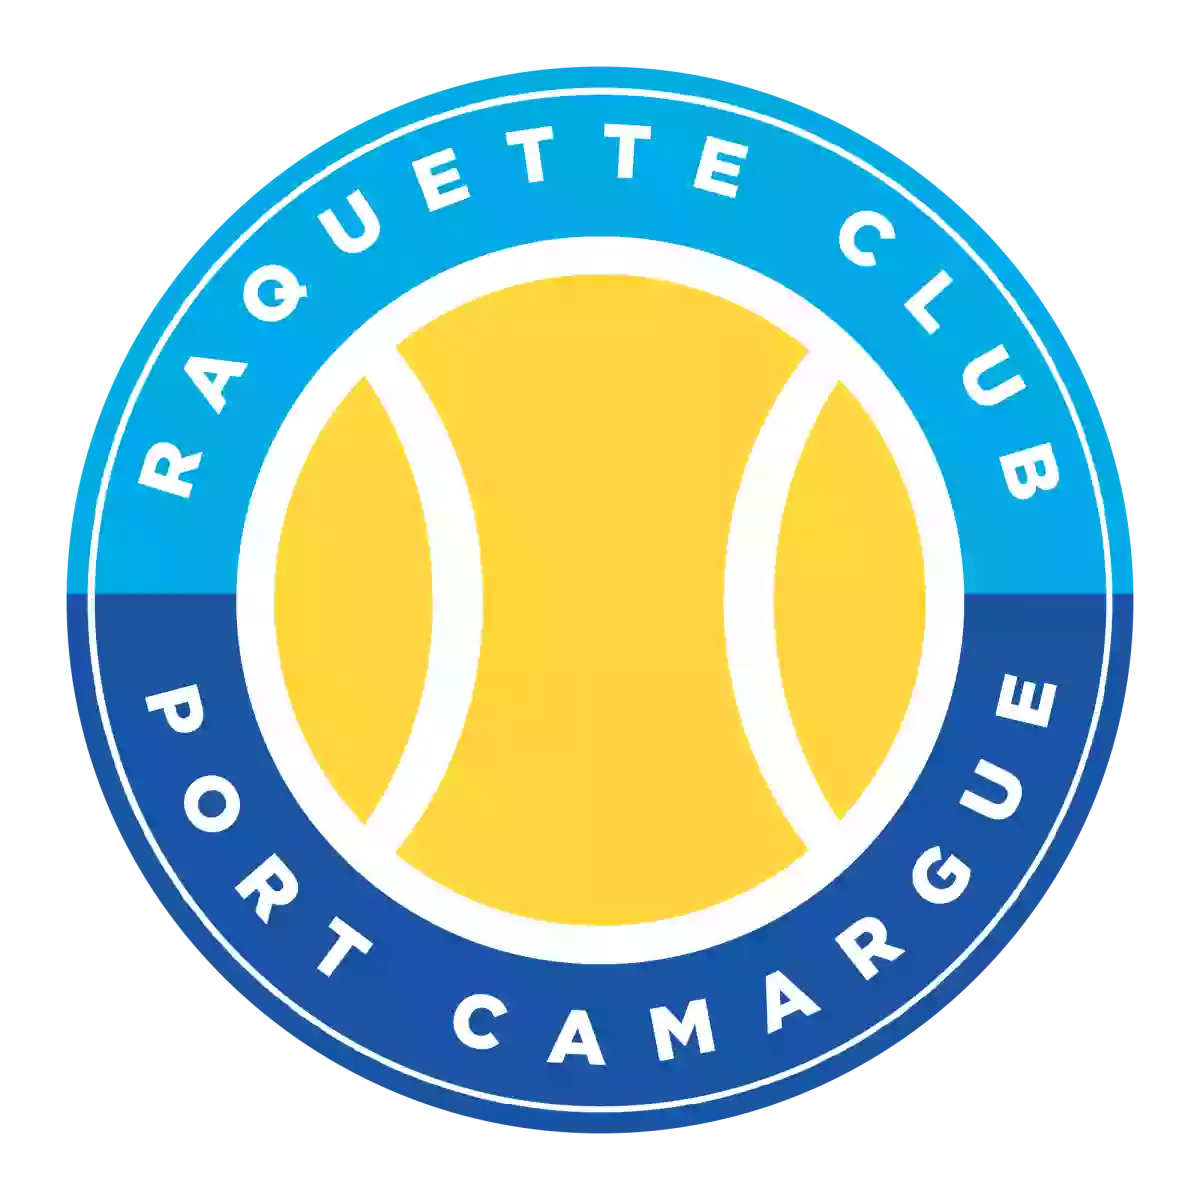 Raquette Club Port Camargue